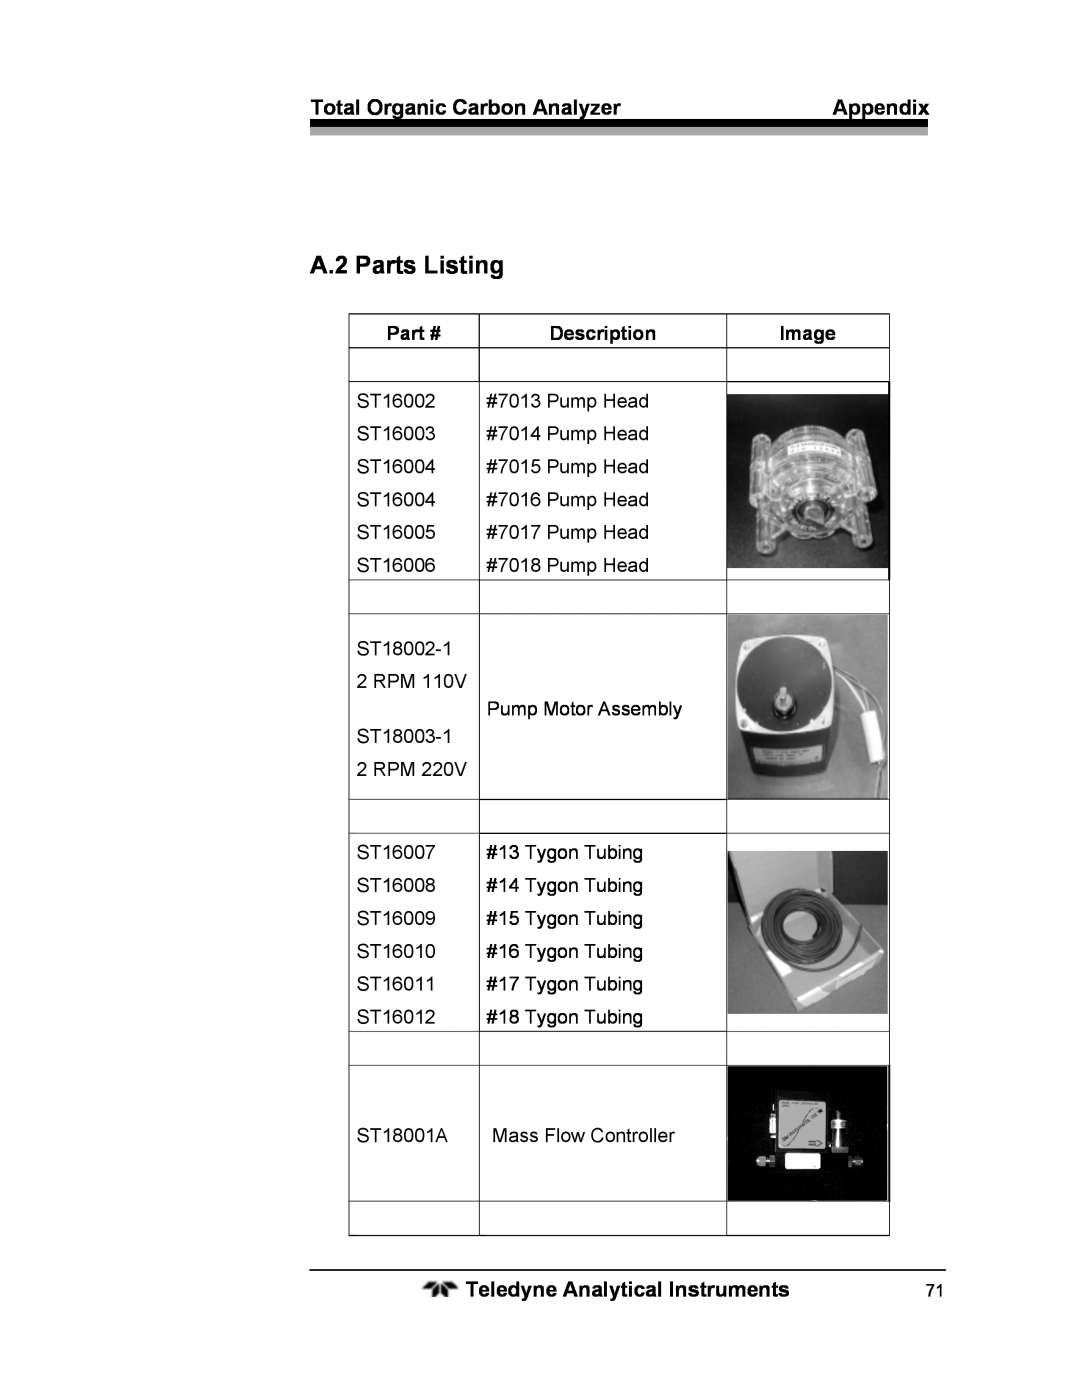 Teledyne 6750 operating instructions A.2 Parts Listing, Part #, Description, Image 